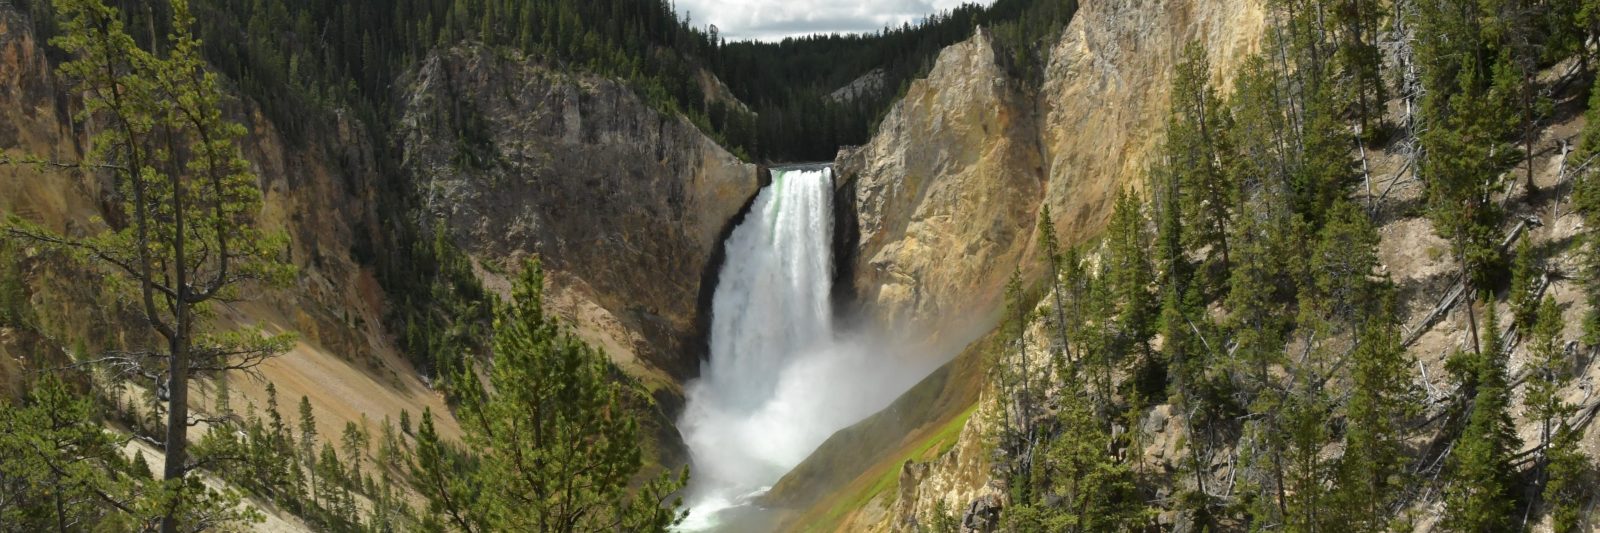 Lower Falls, Yellowstone Park